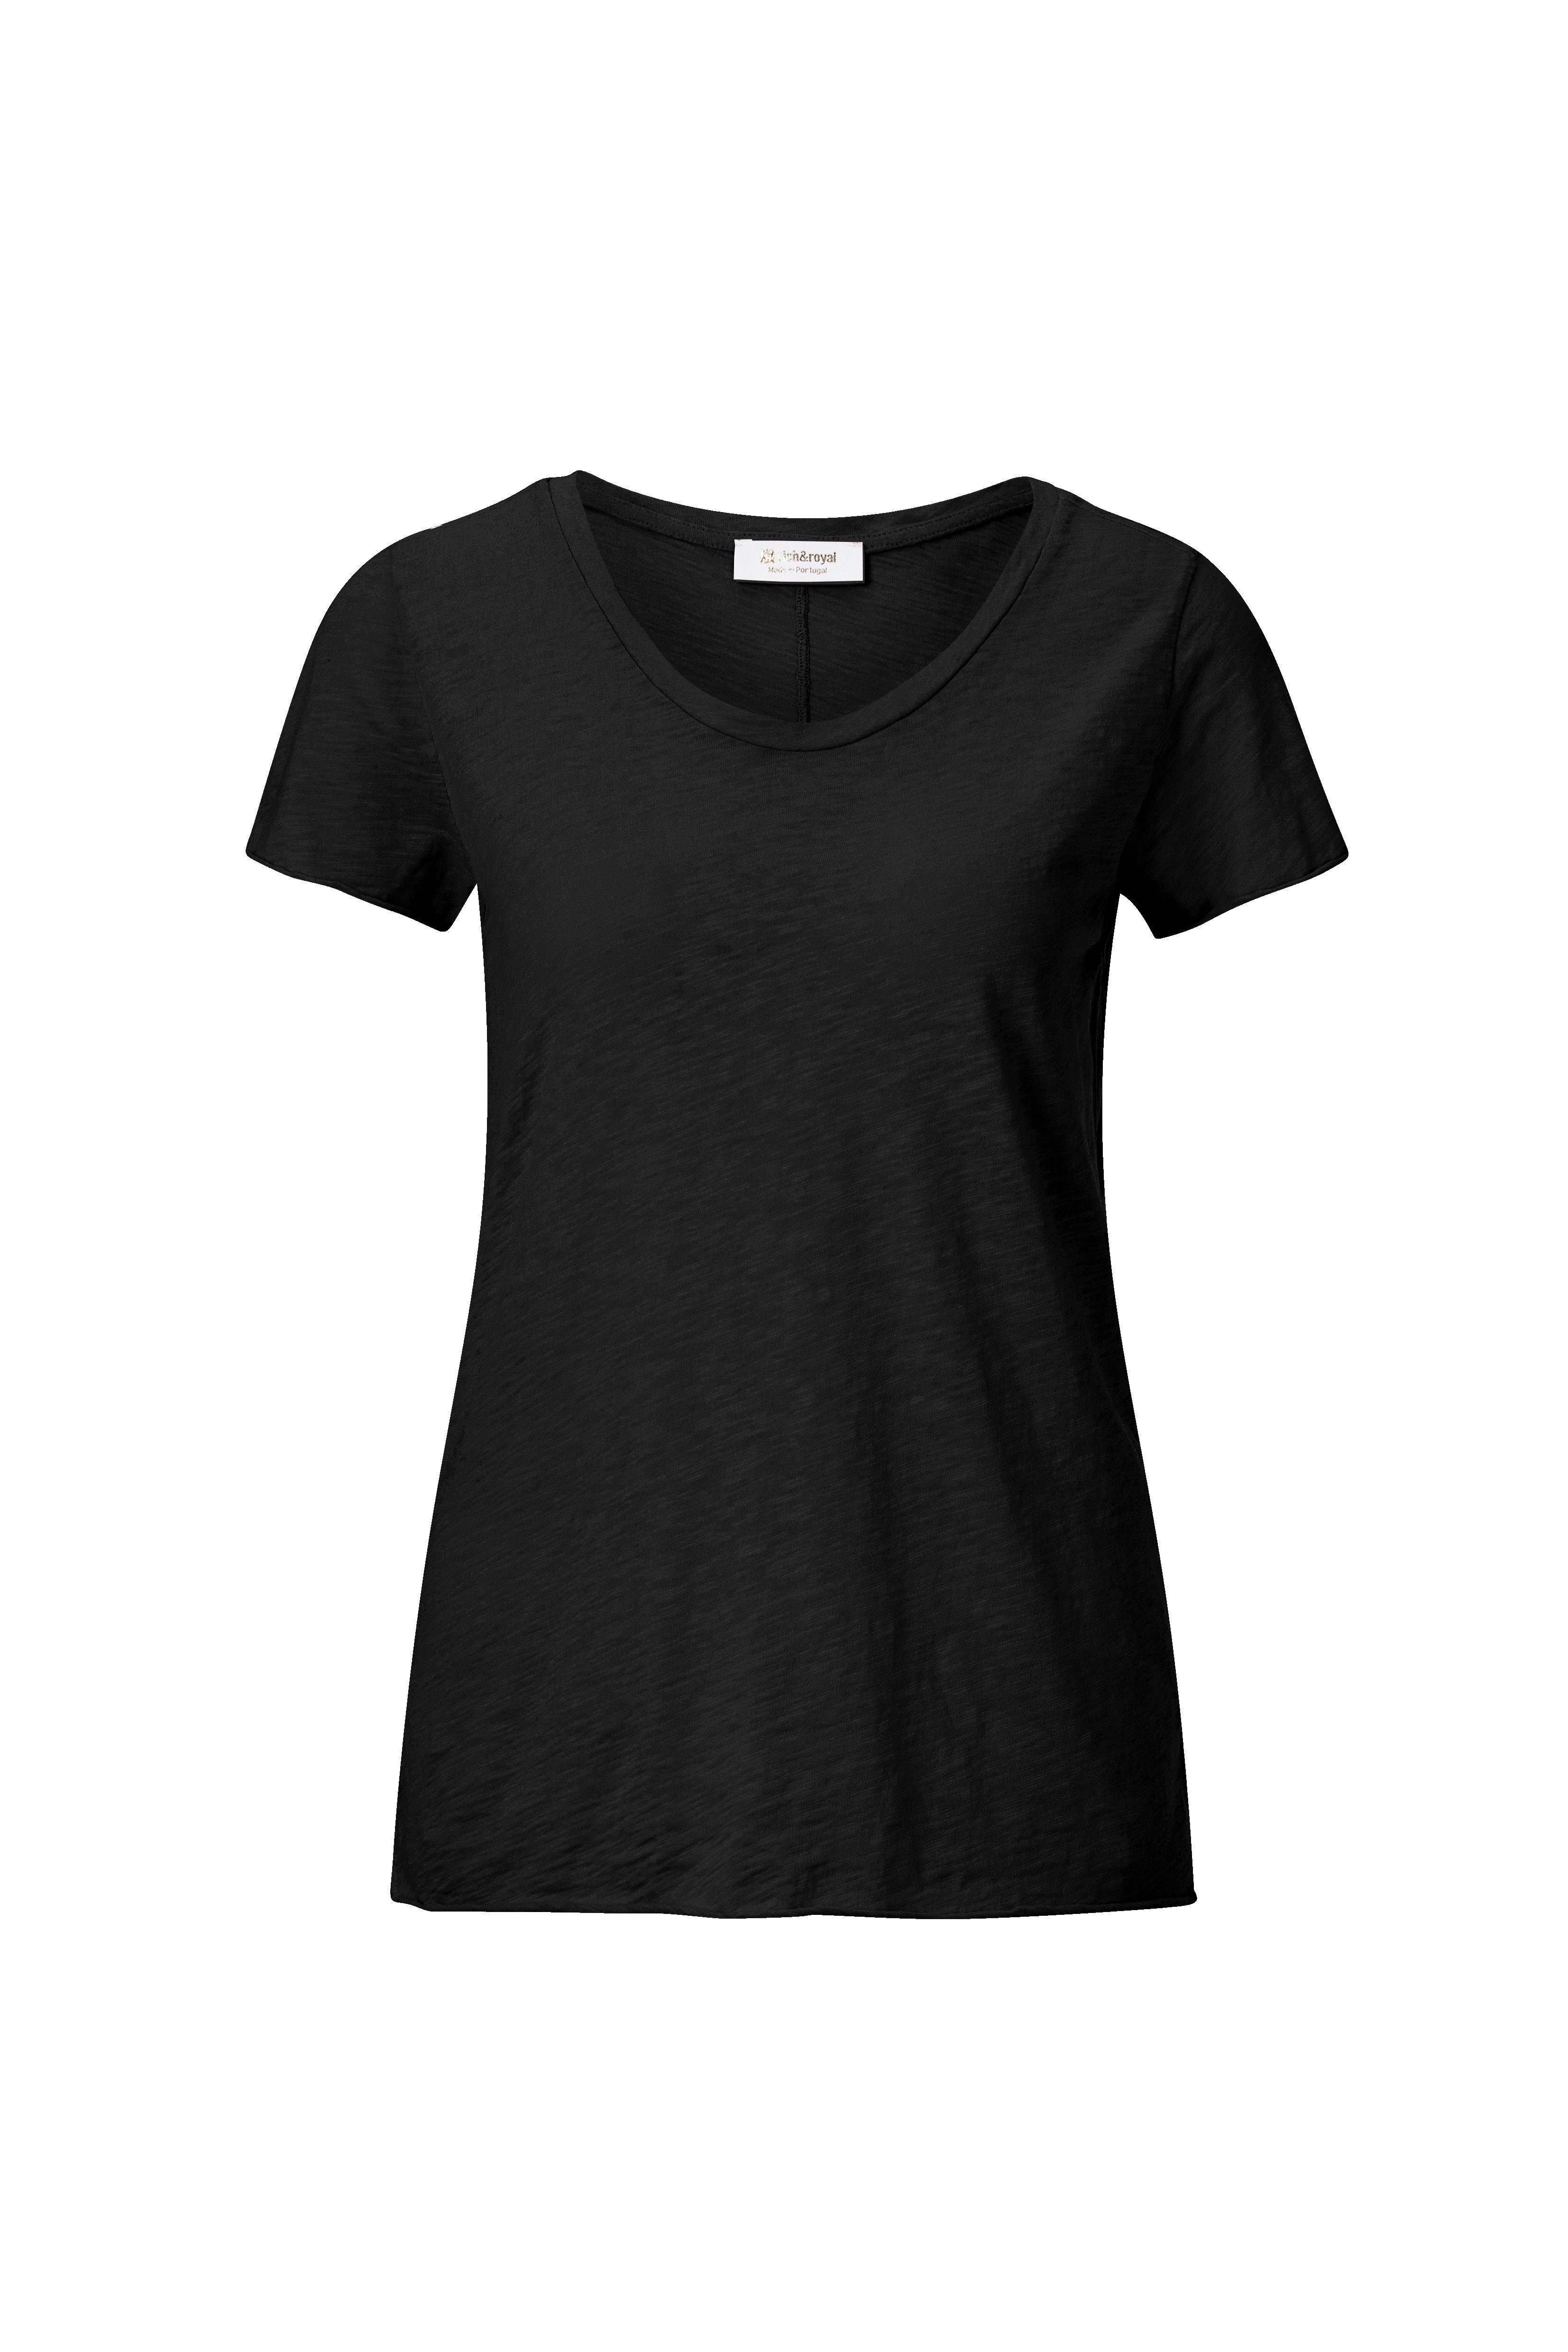 Rich & Royal Basic-Form black in T-Shirt femininer